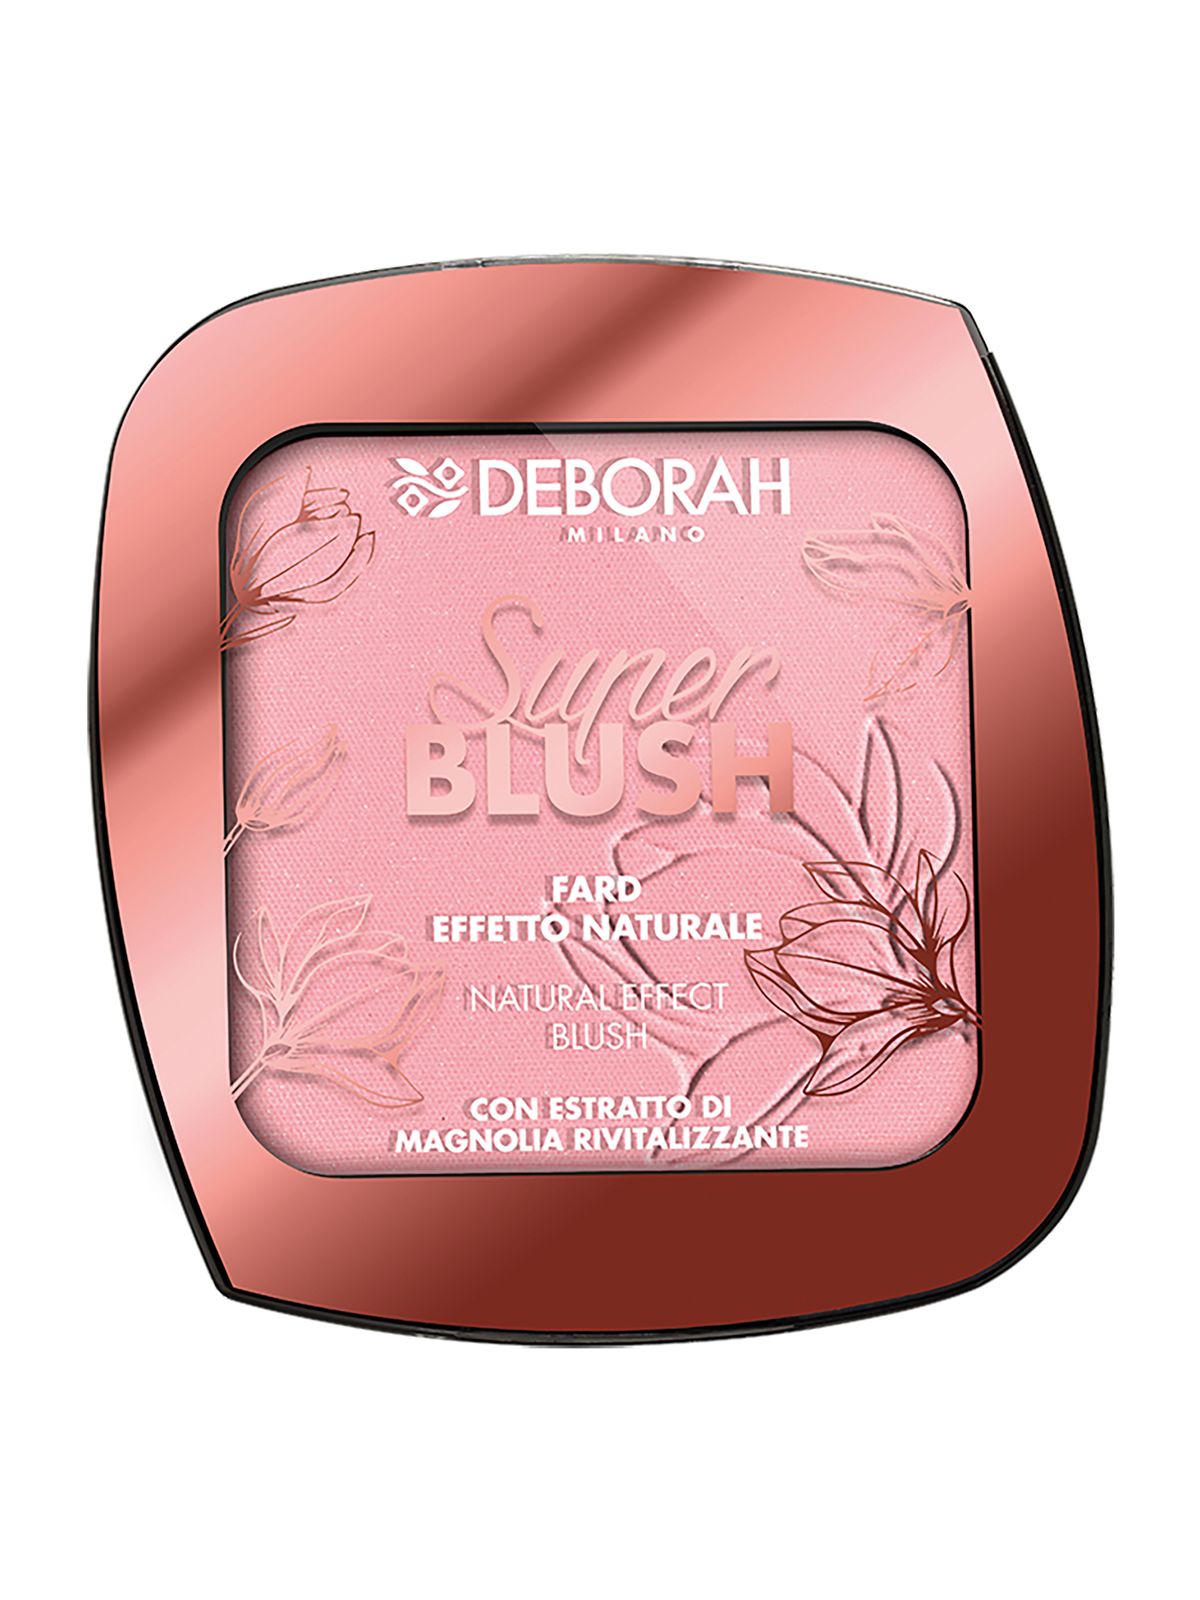 Румяна  4 Сияющий персиковый  Deborah Milano Super Blush румяна 3 кирпично розовый deborah milano super blush